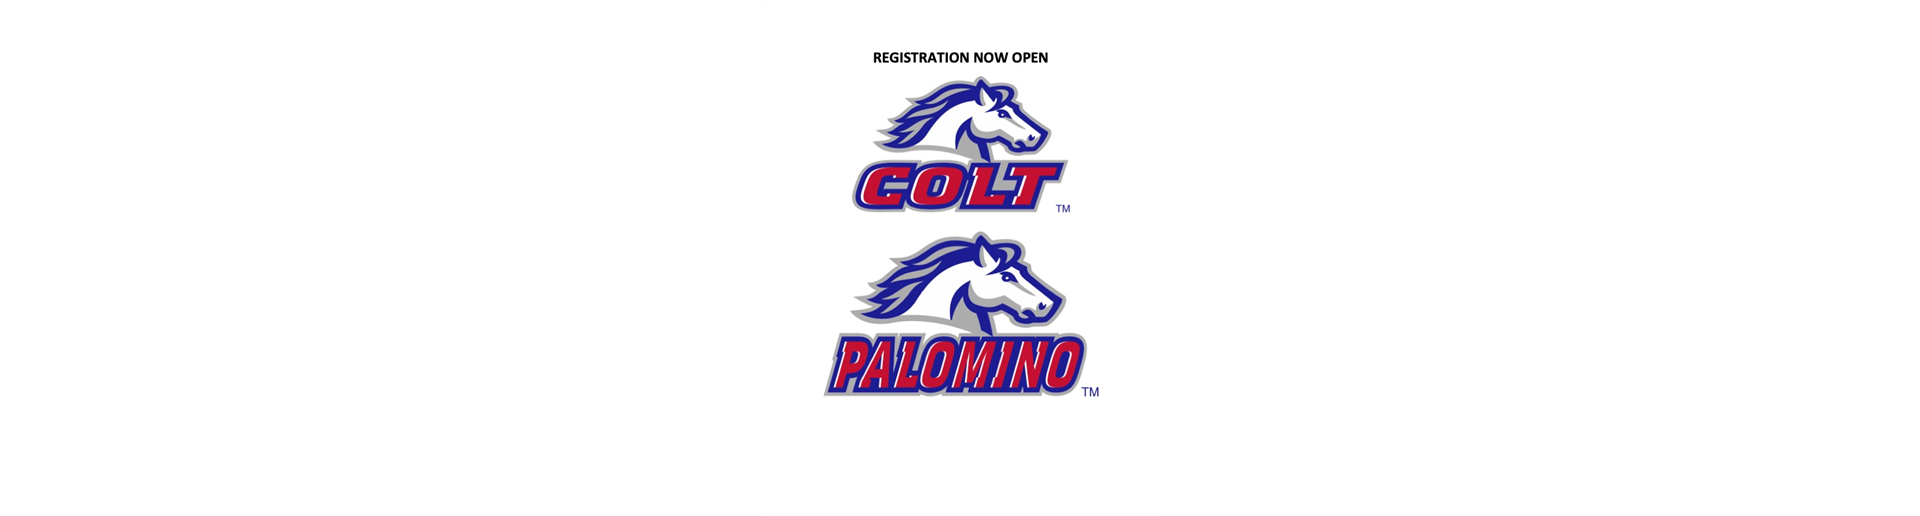 Colt & Palomino Registraton Now Open 